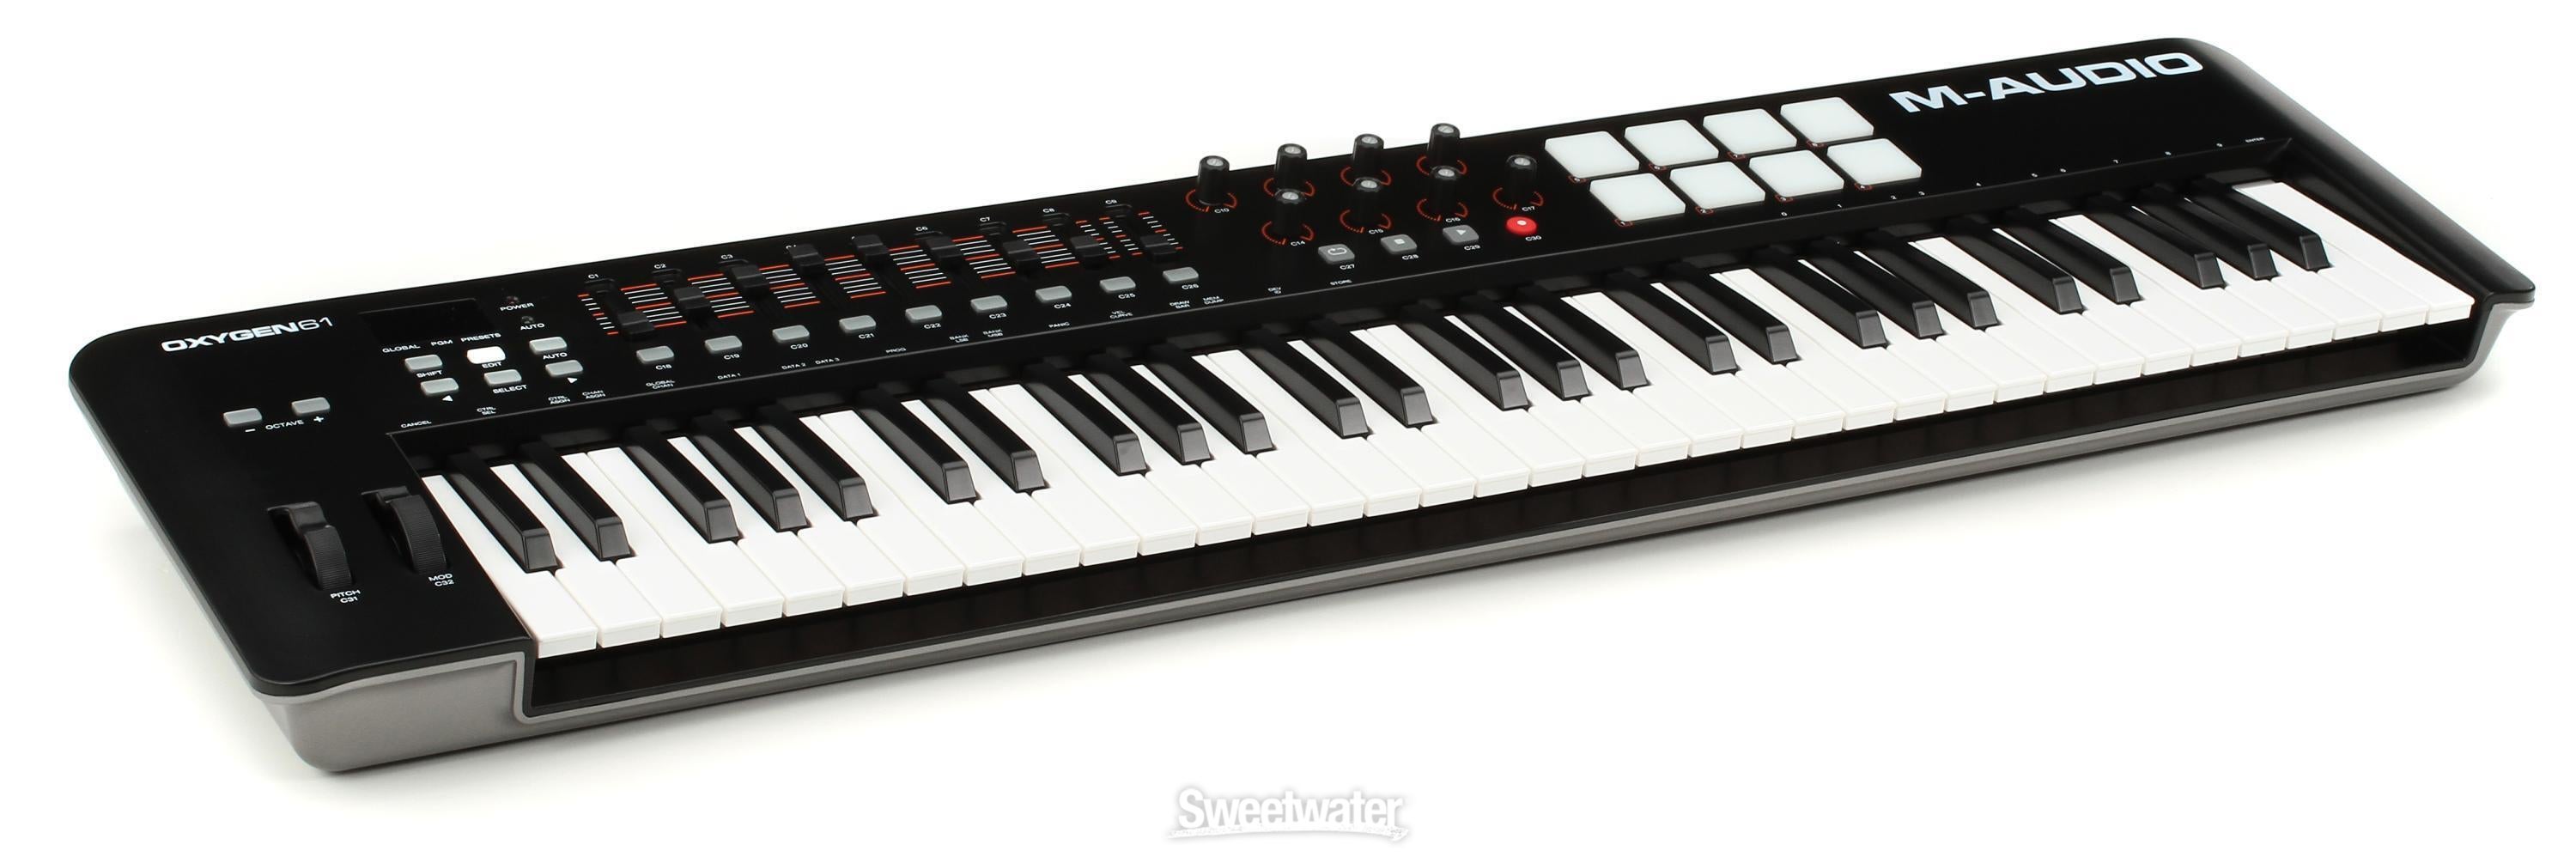 M-Audio Oxygen 61 61-key Keyboard Controller Reviews | Sweetwater